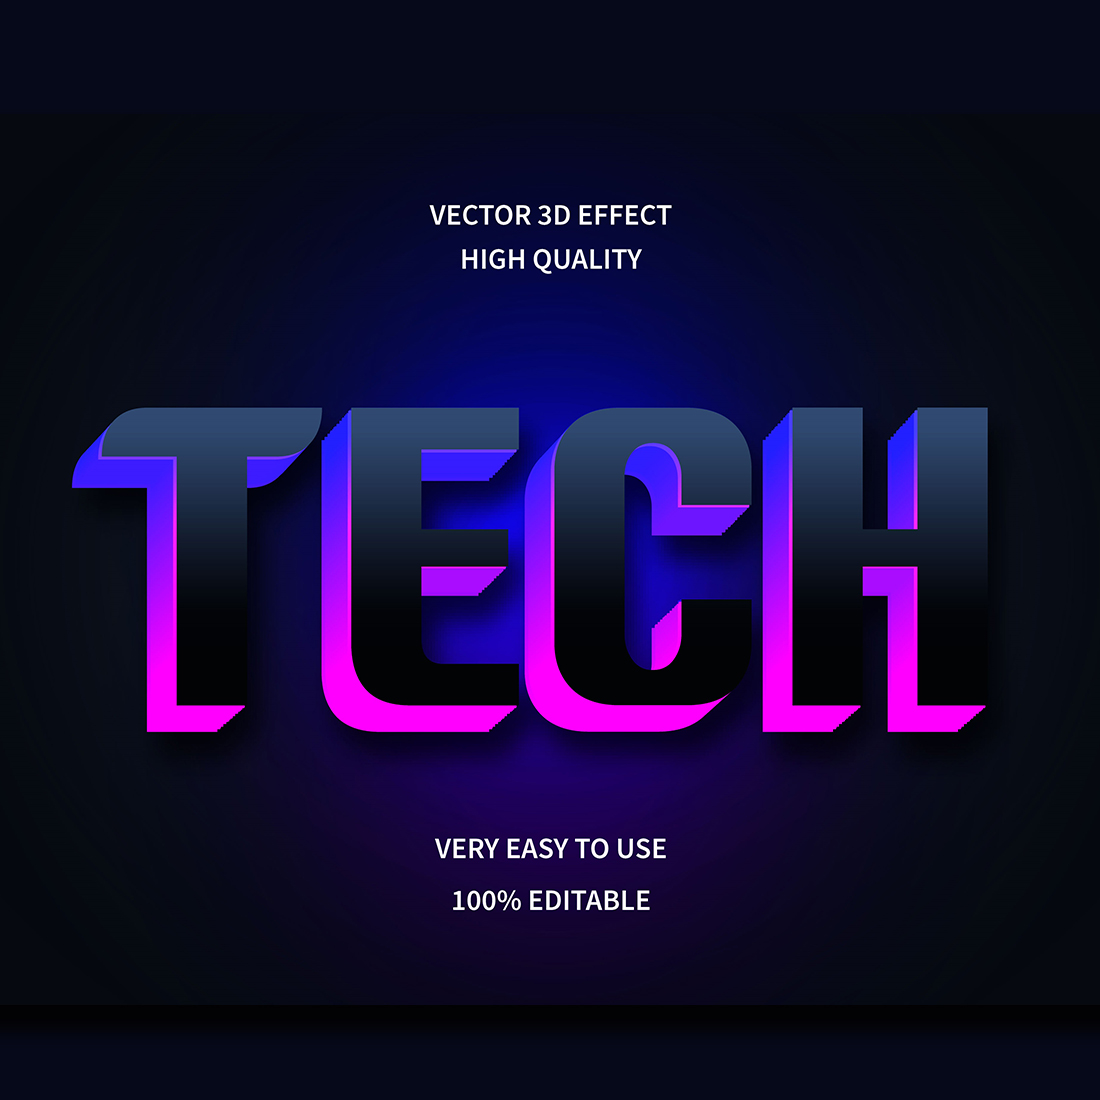 Tech Editable 3D Text Effect Vector cover image.